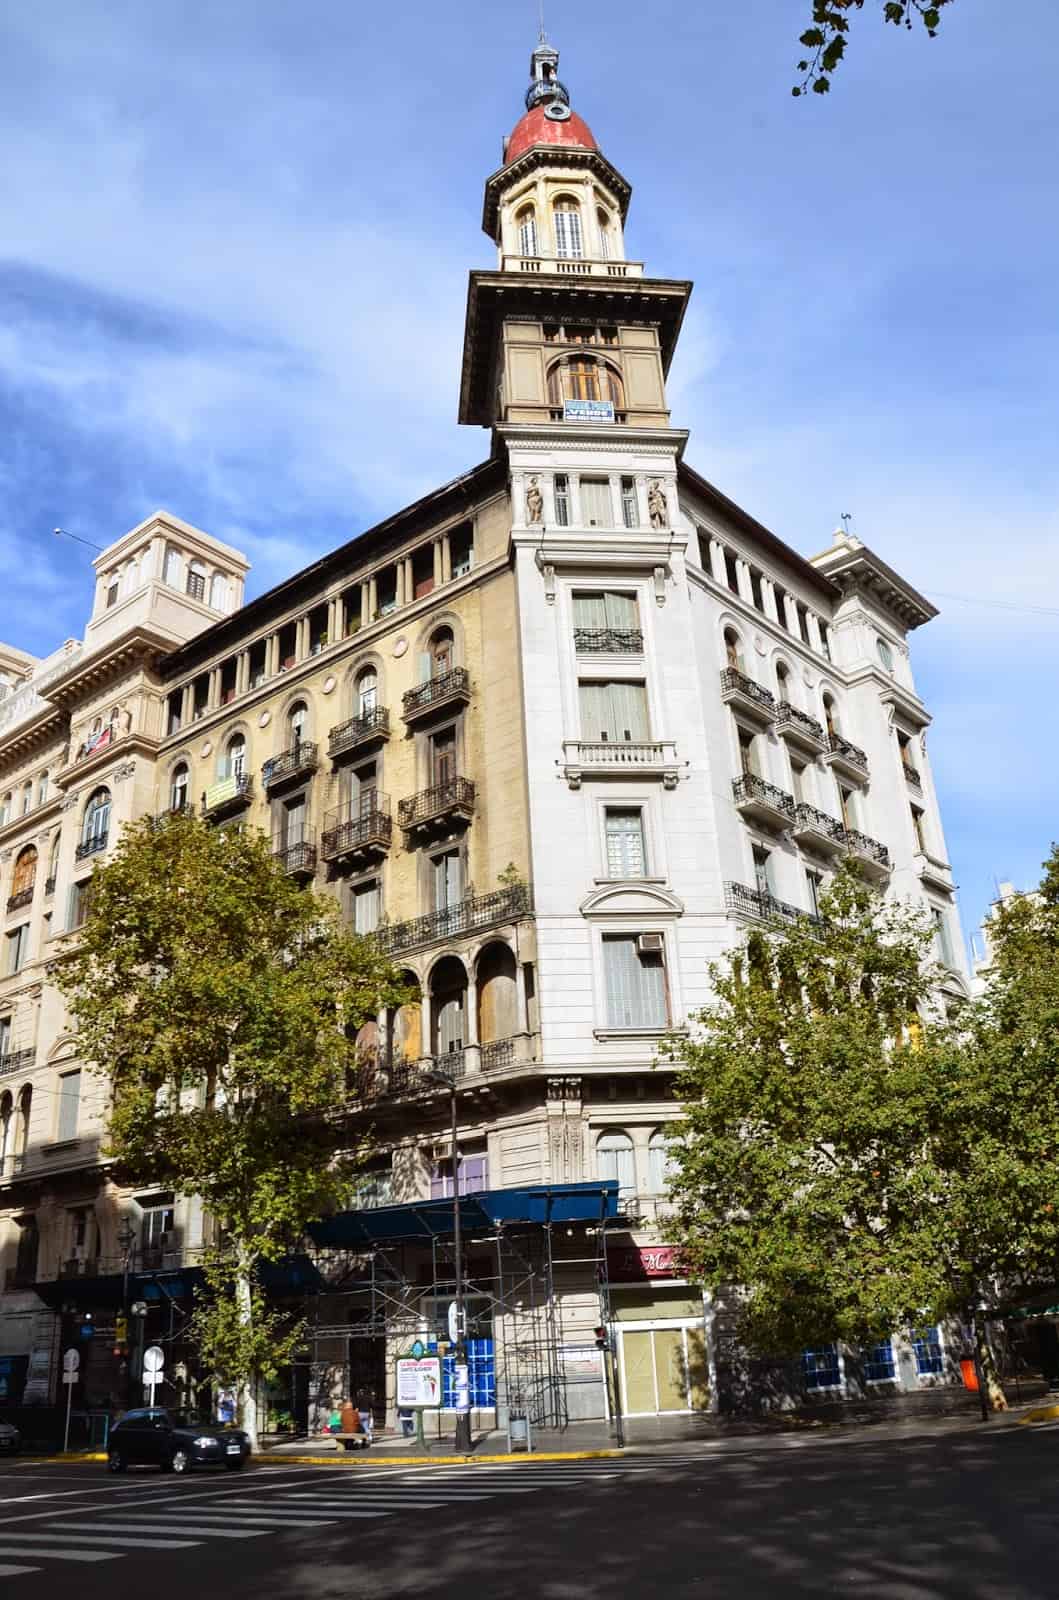 La Inmobiliaria in Buenos Aires, Argentina